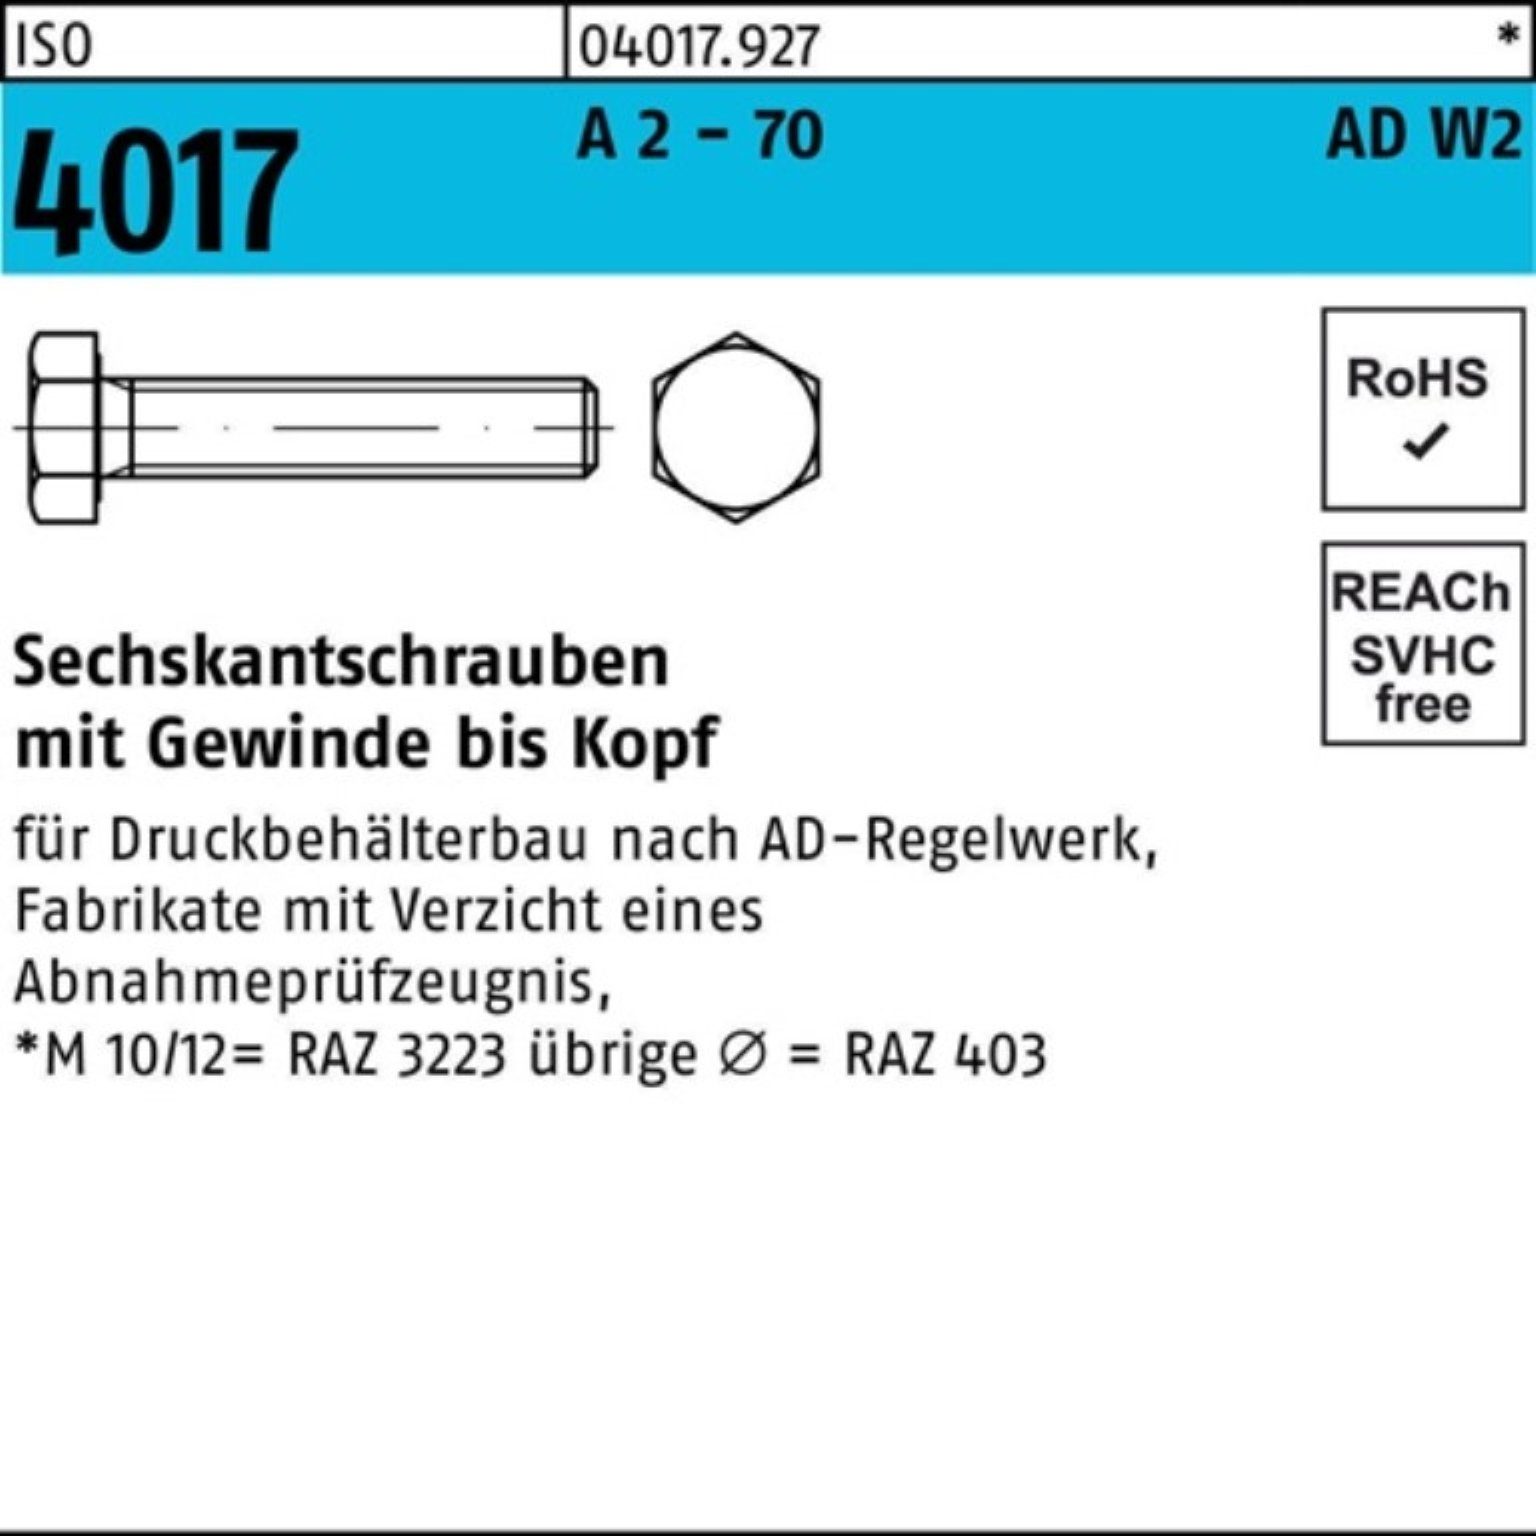 Bufab Sechskantschraube 100er 60 Pack St Sechskantschraube 25 A VG AD-W2 ISO 70 - M20x 4017 2